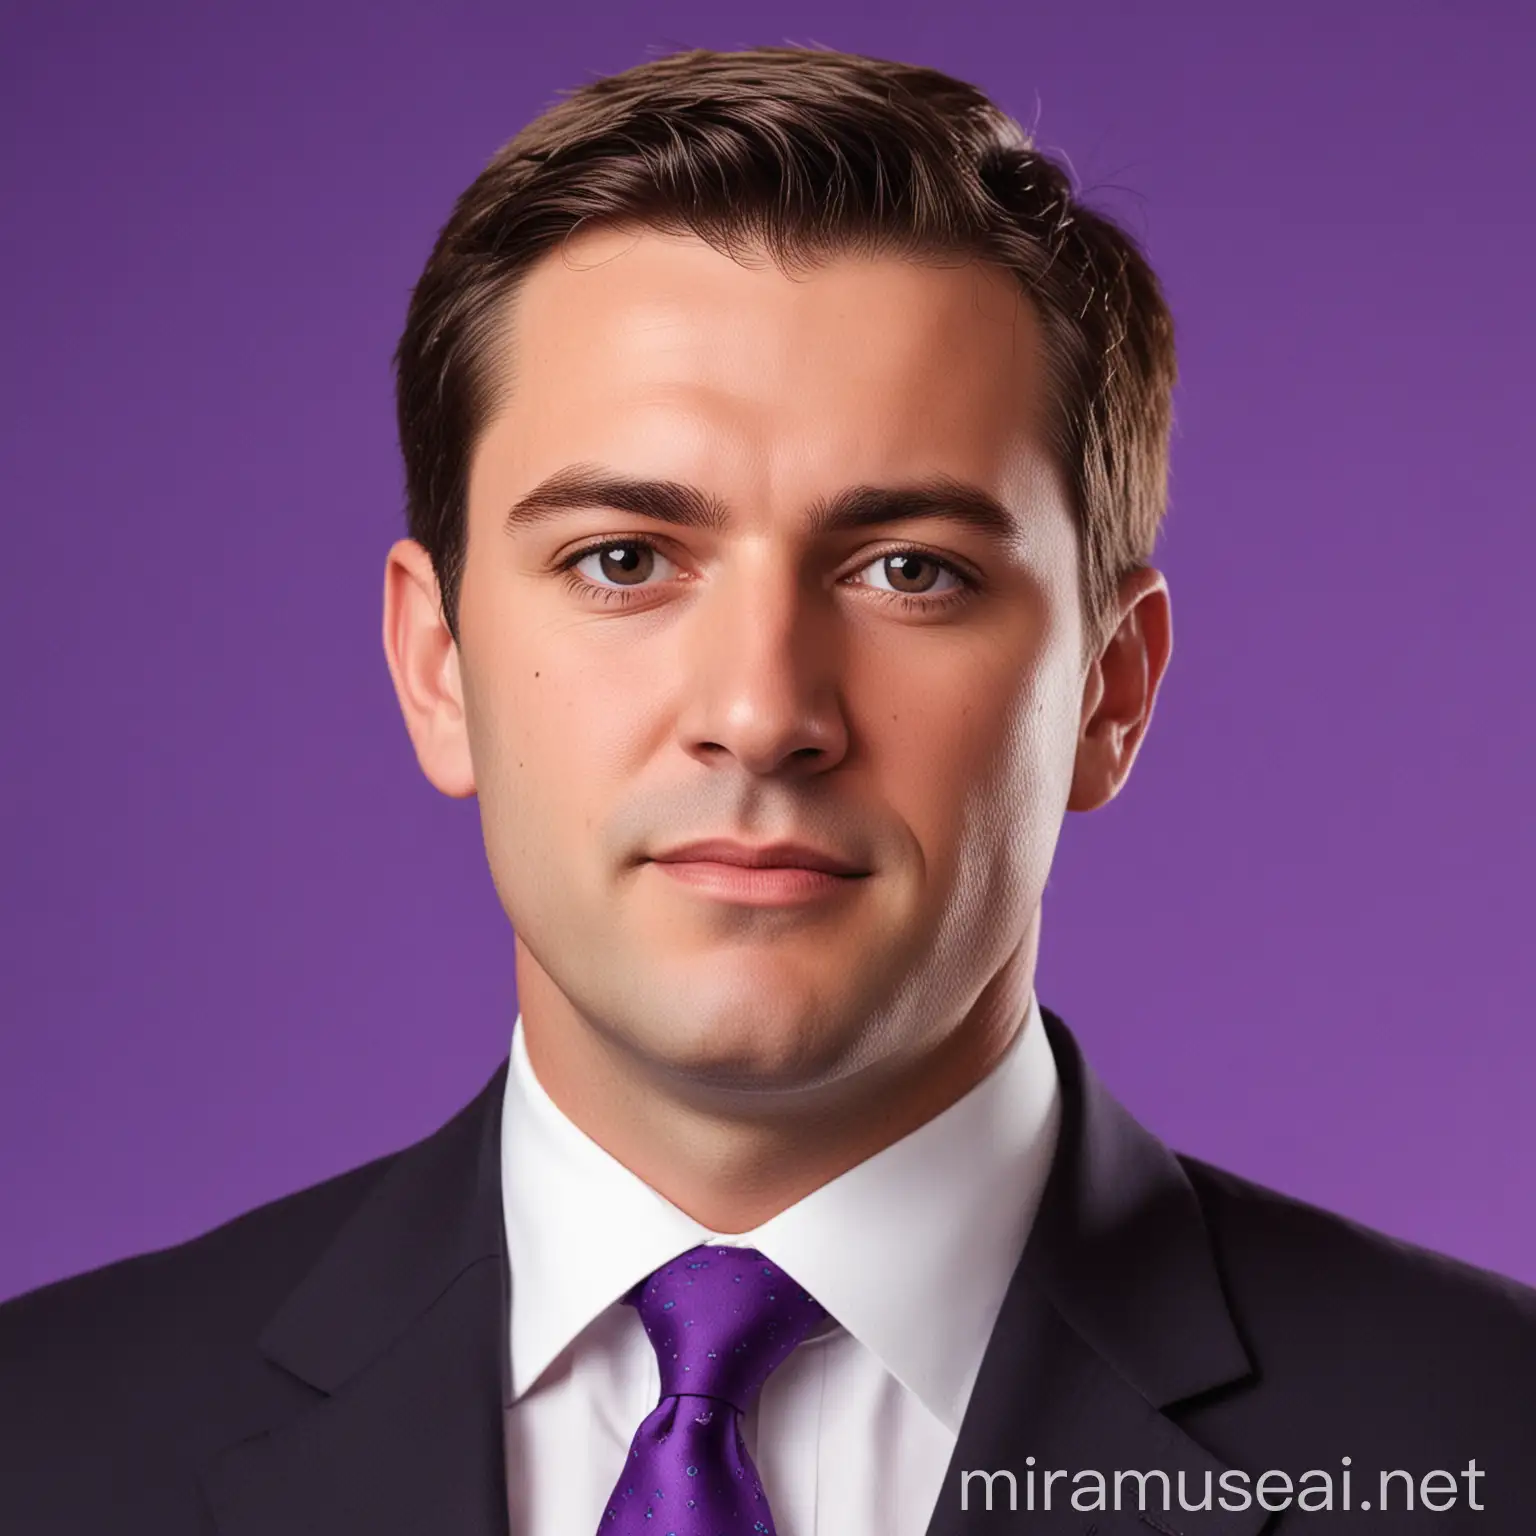 Conservative Male Politician on Purple Background